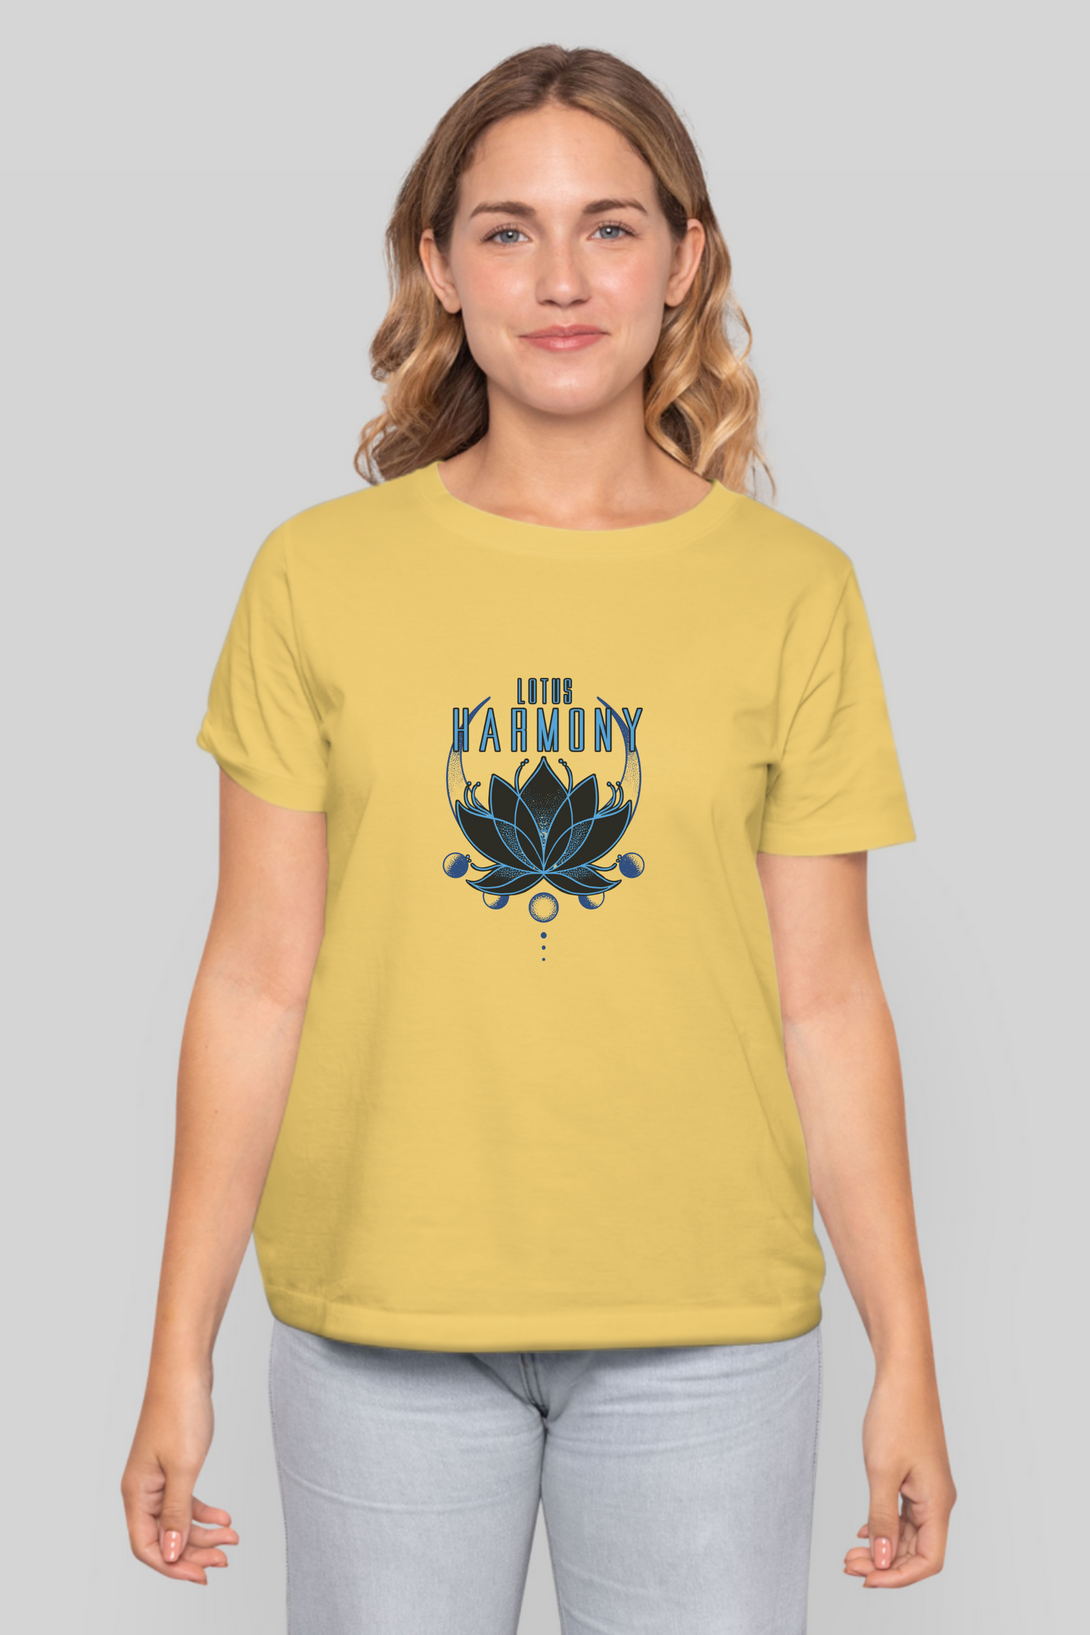 Harmony Lotus Printed T-Shirt For Women - WowWaves - 7